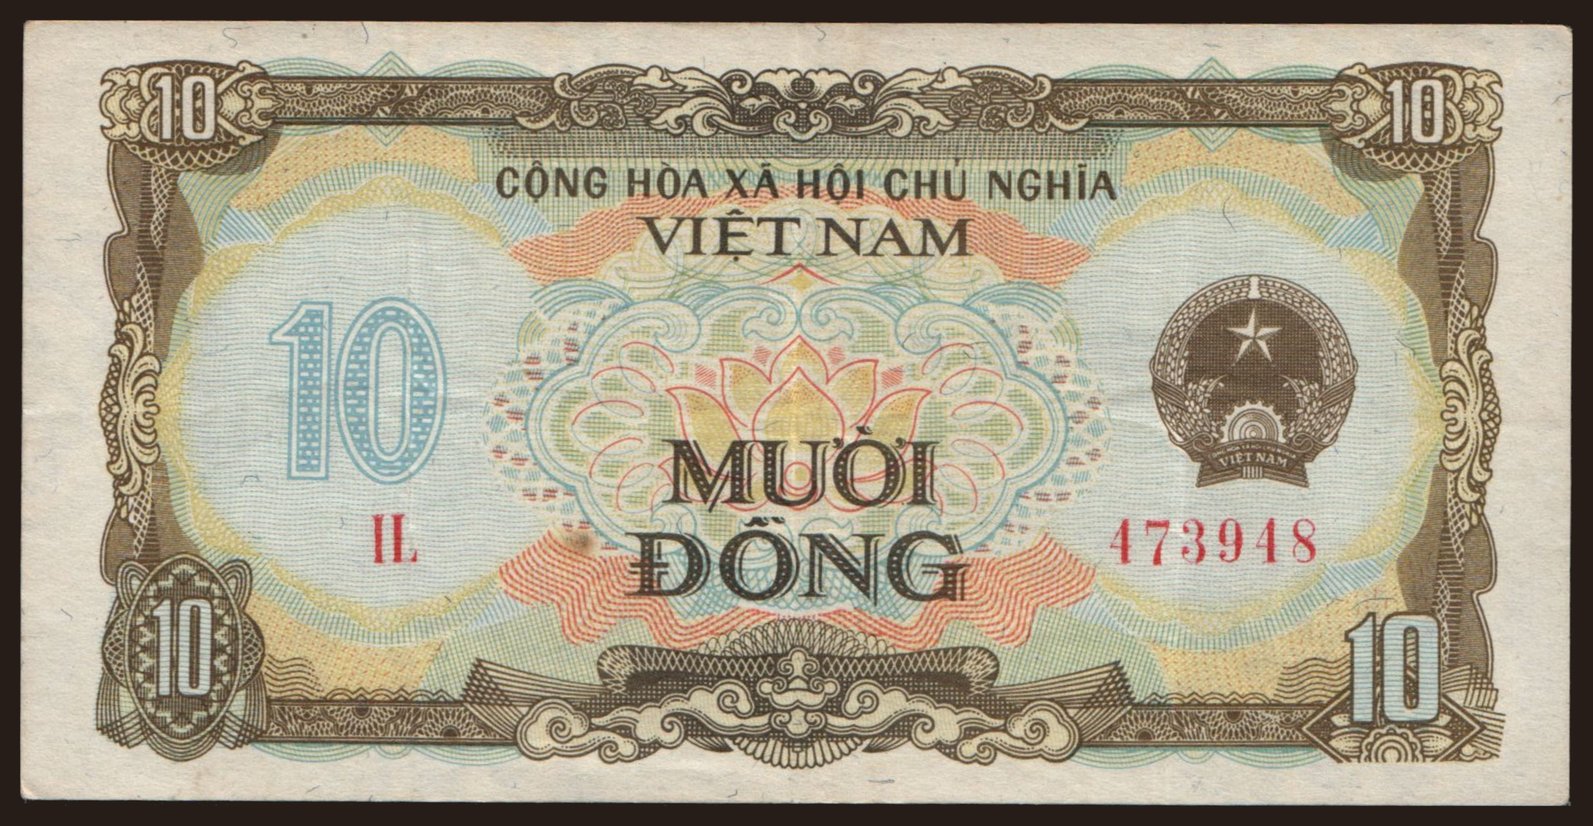 10 dong, 1980